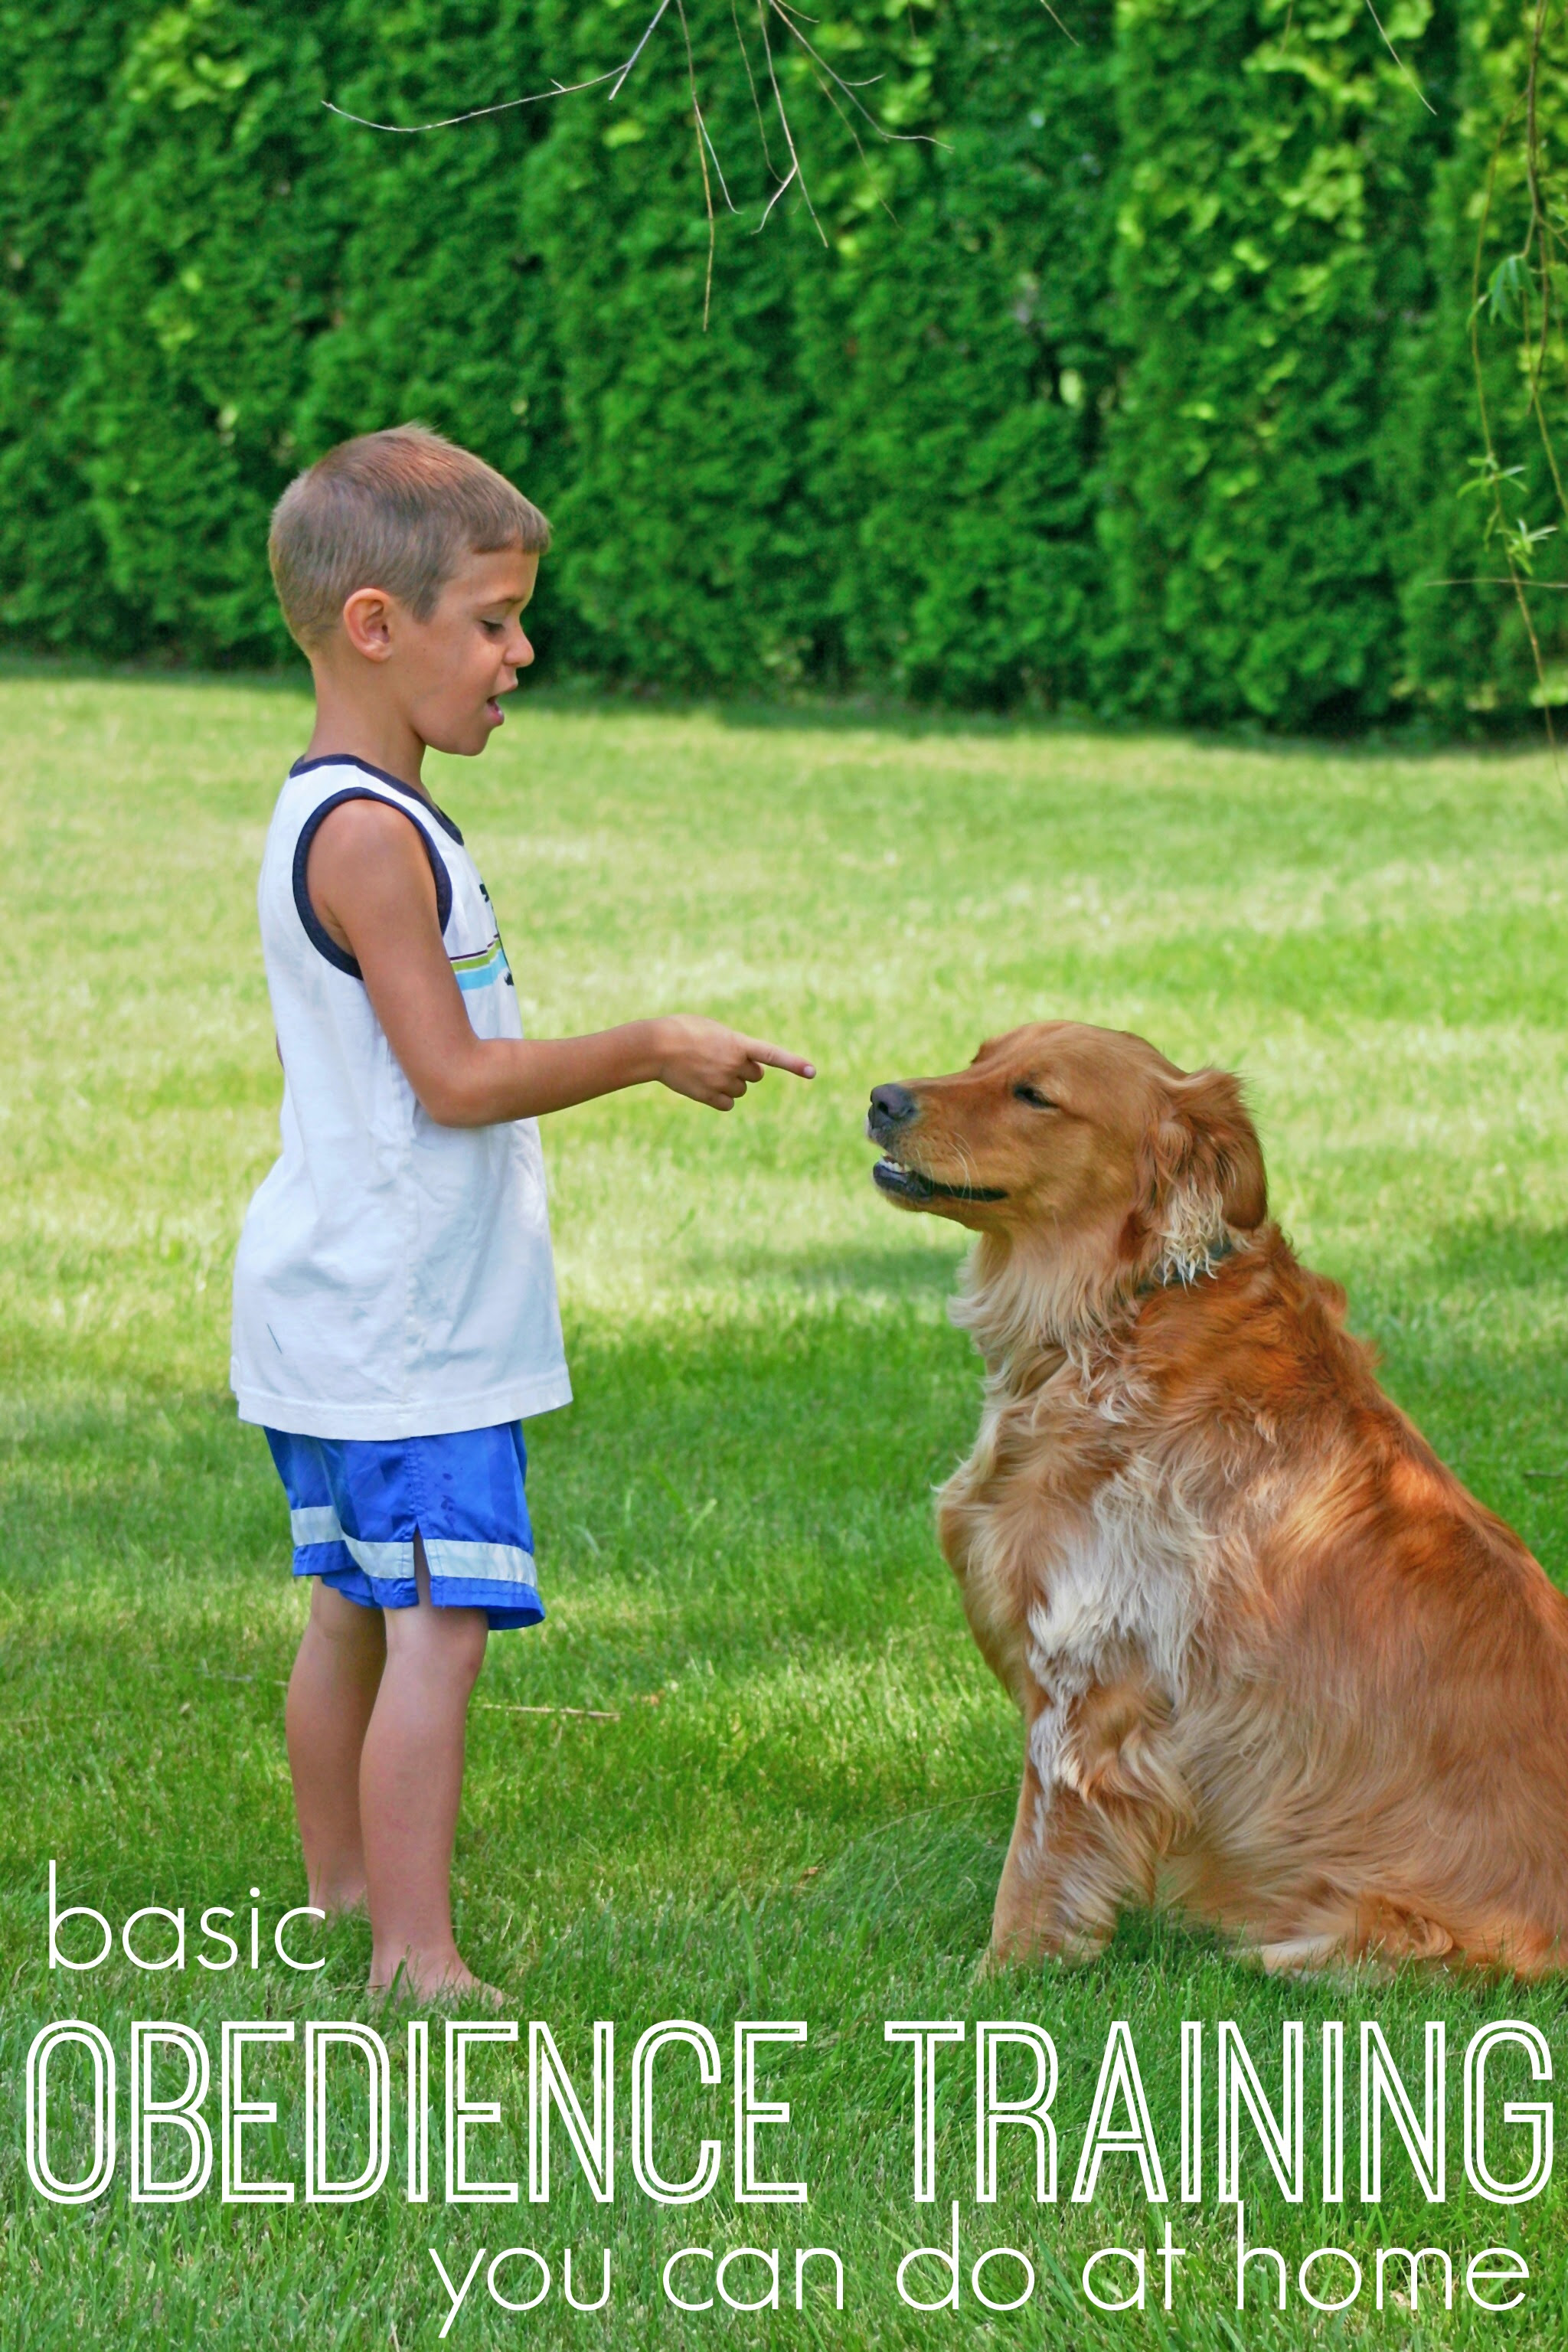 Basic Dog Obedience Training Tips and Tools via Tipsaholic.com